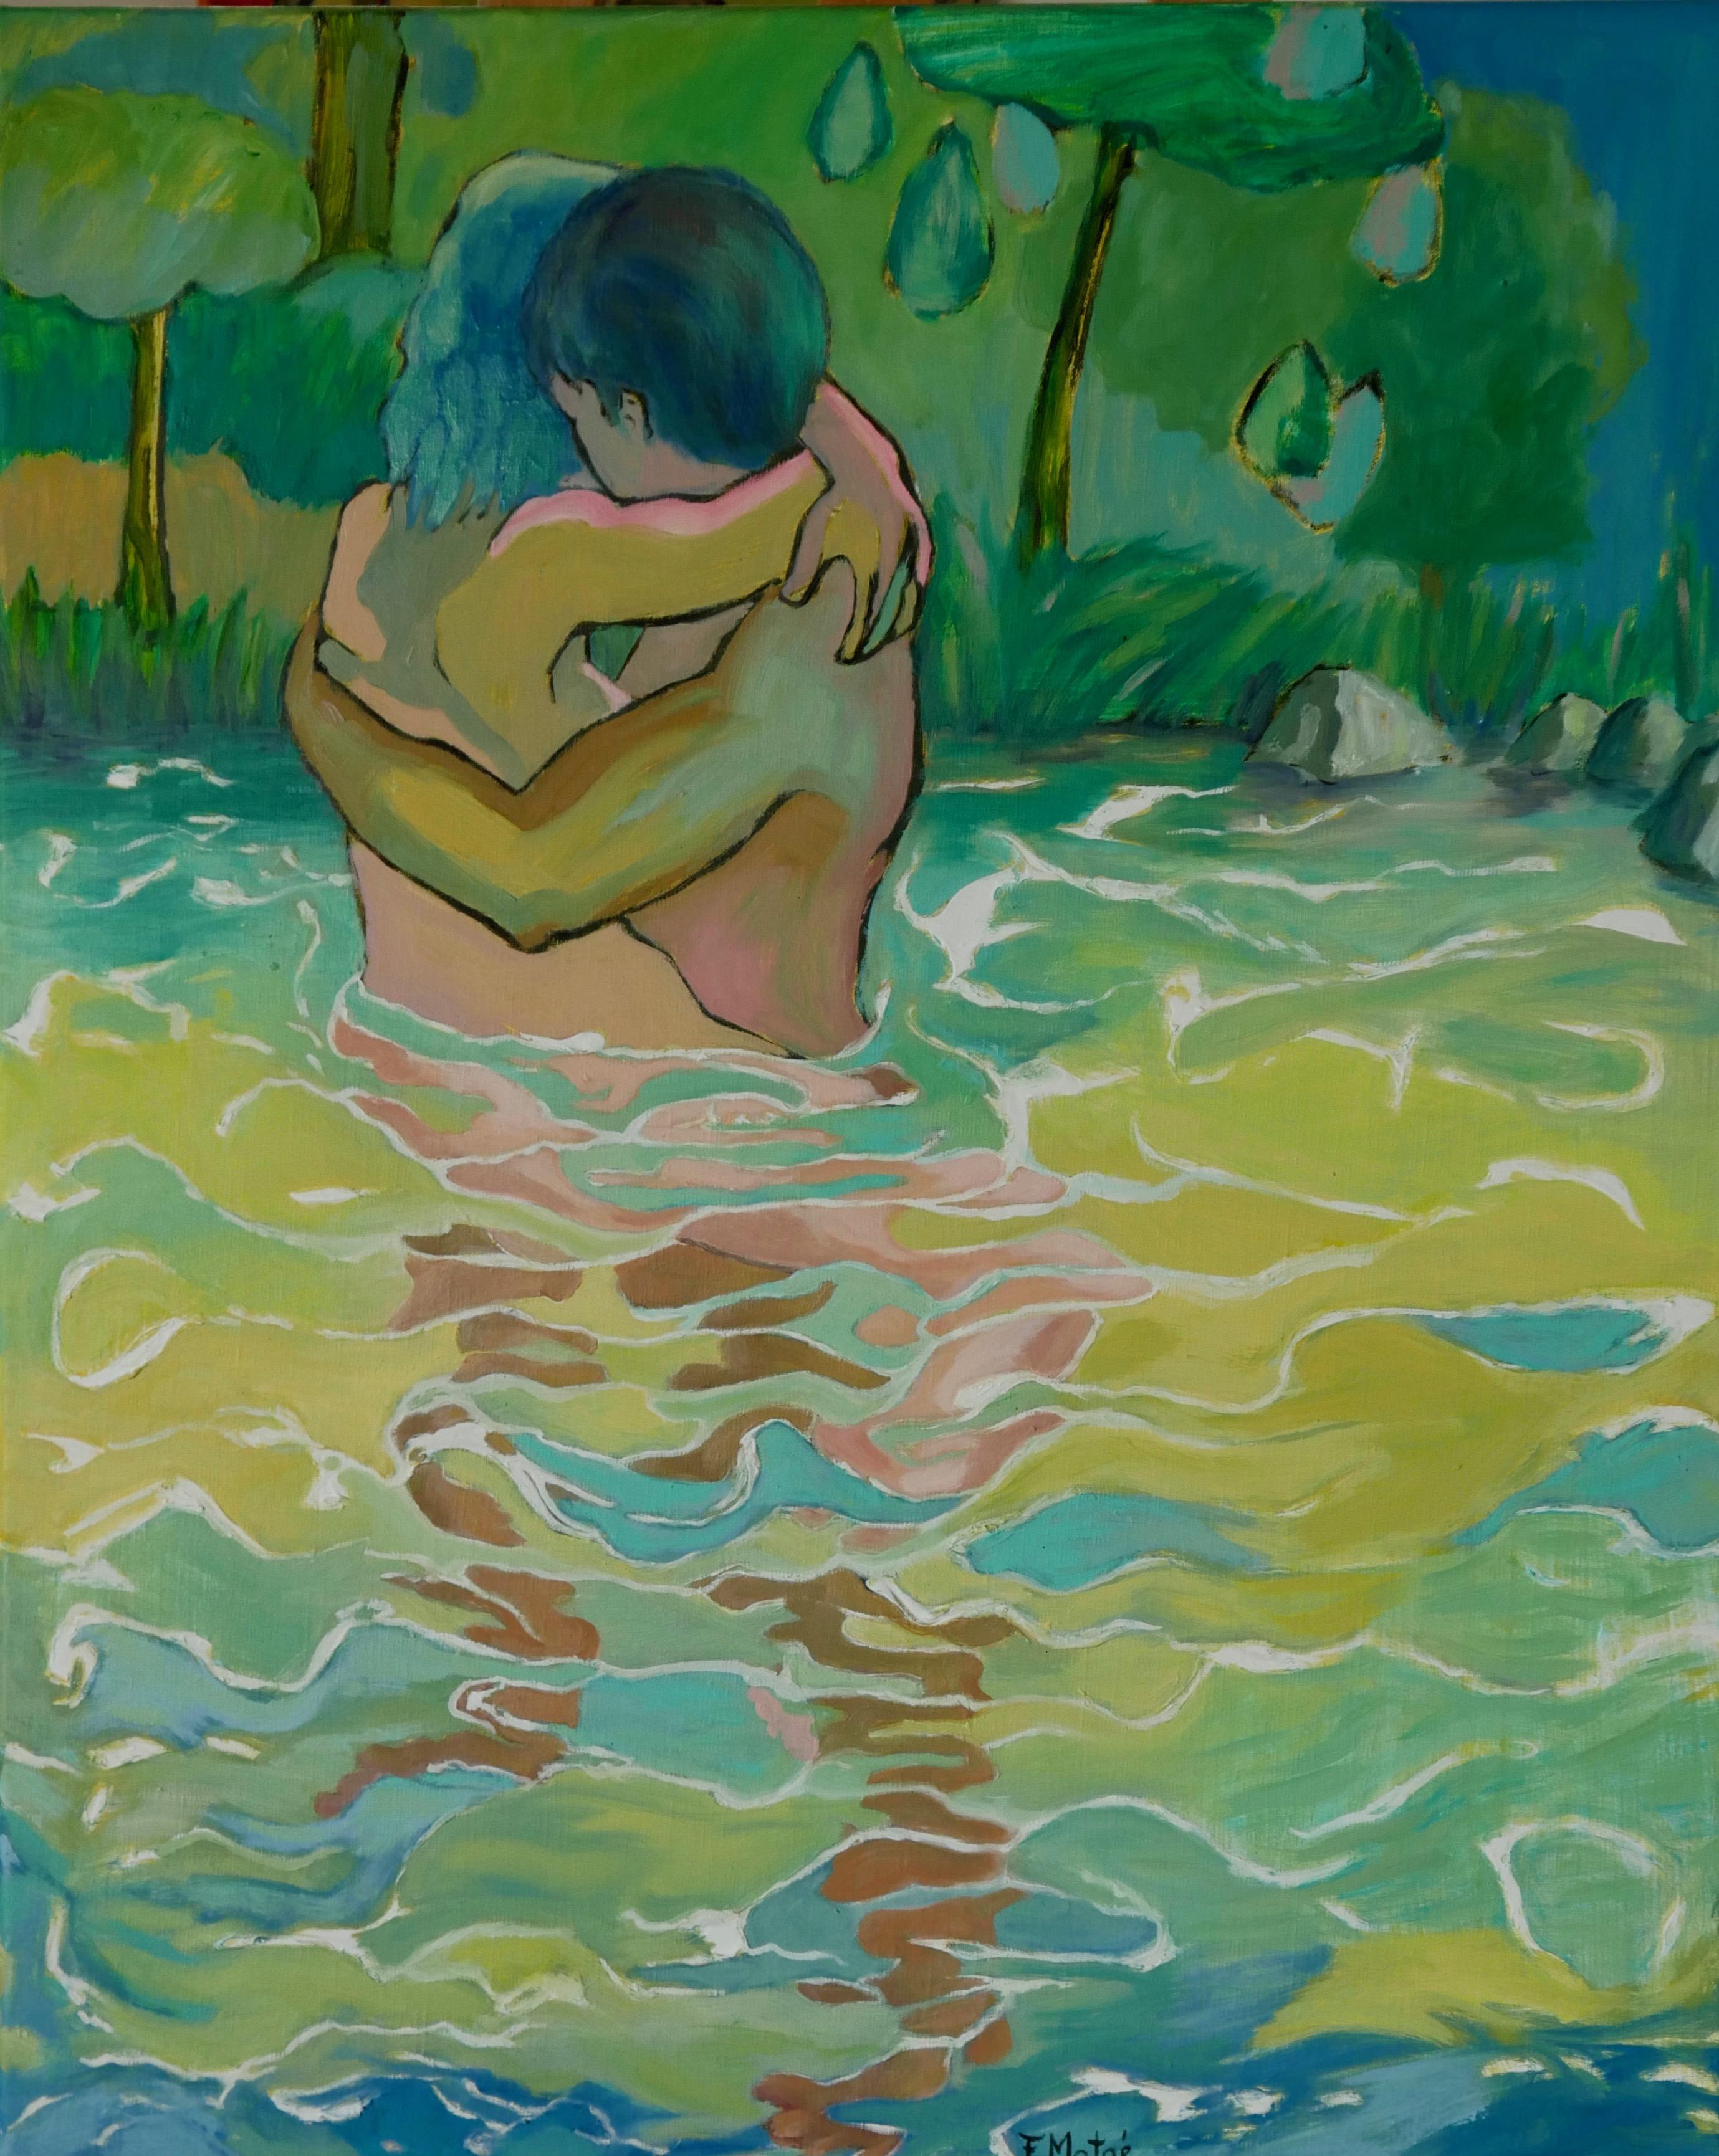 Along the Water - Peinture à l'huile figurative rose, vert, blanc, bleu, brun et jaune 